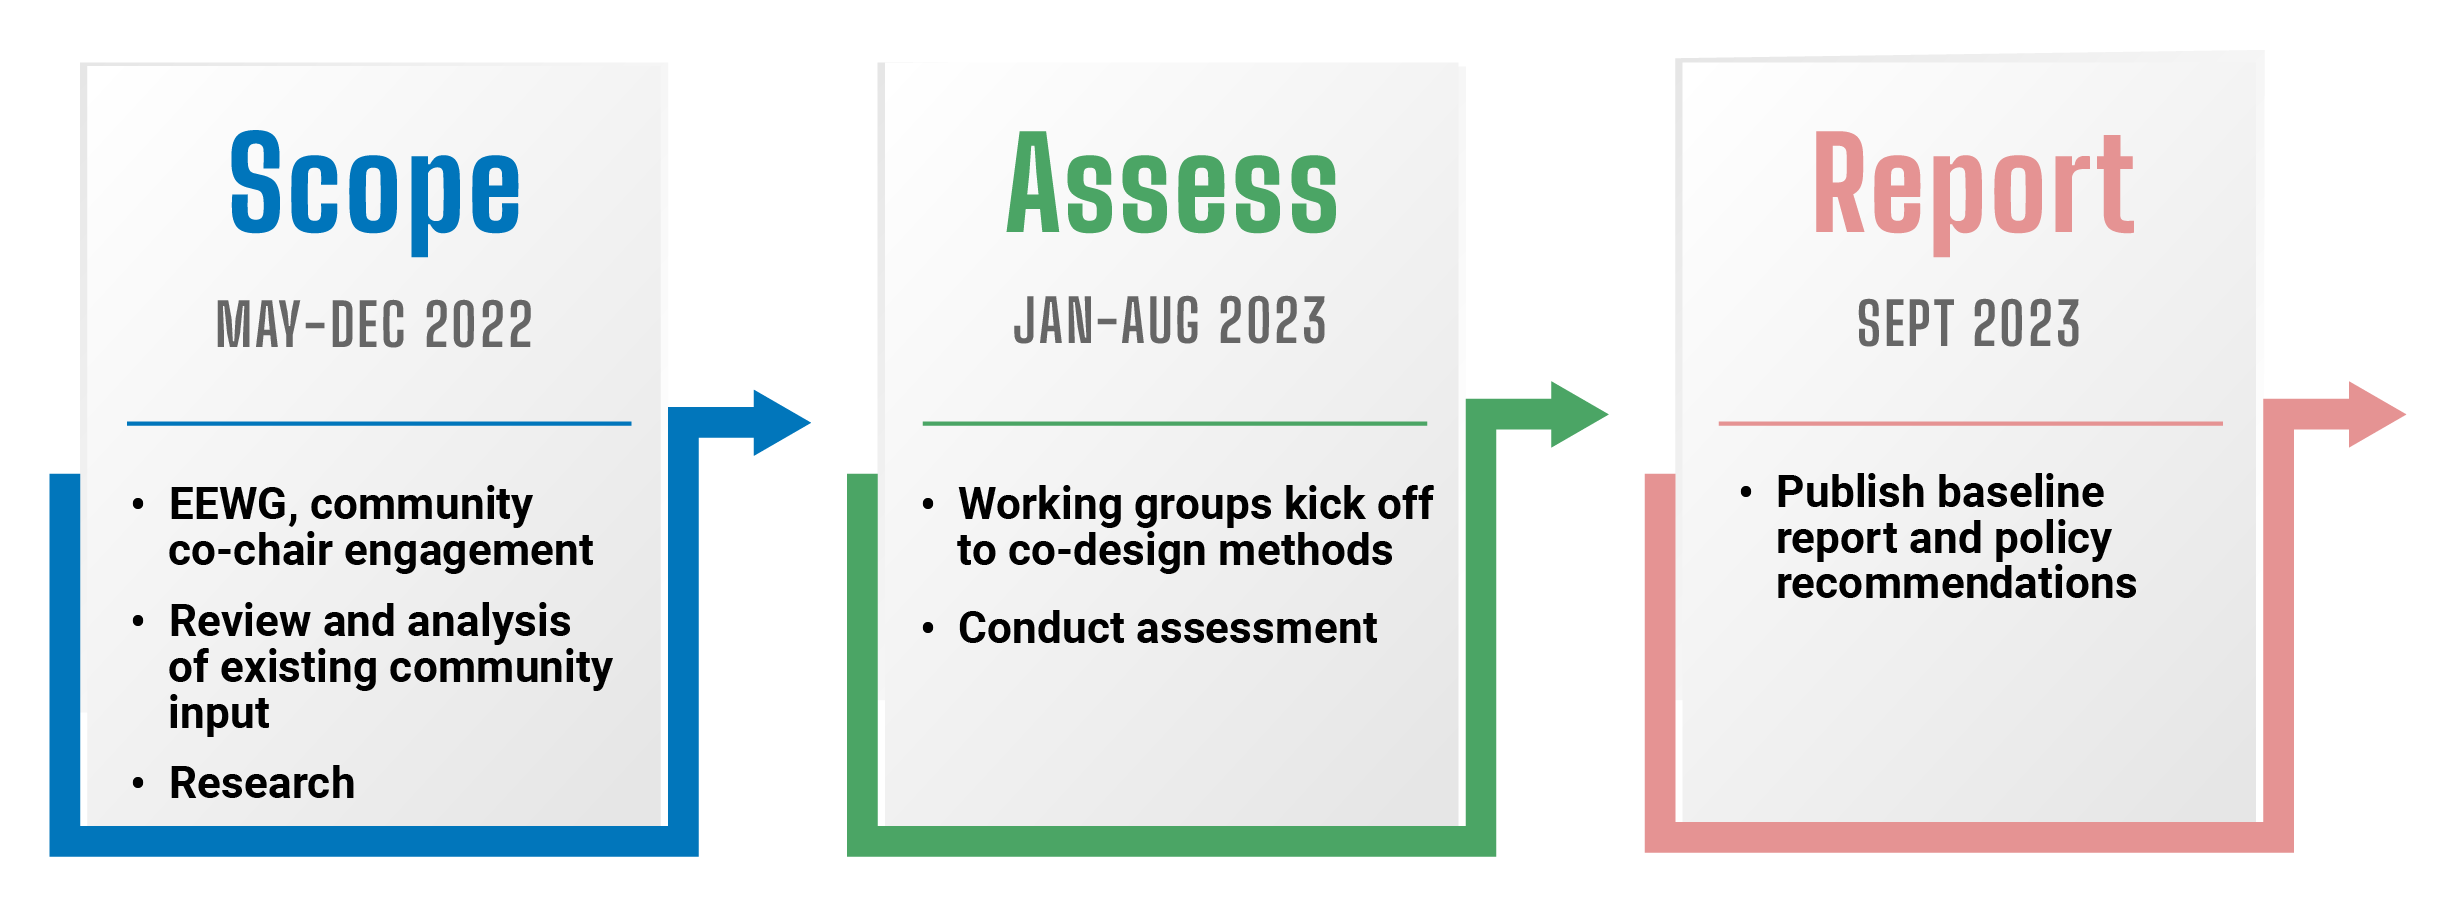 Timeline of Assessment Process